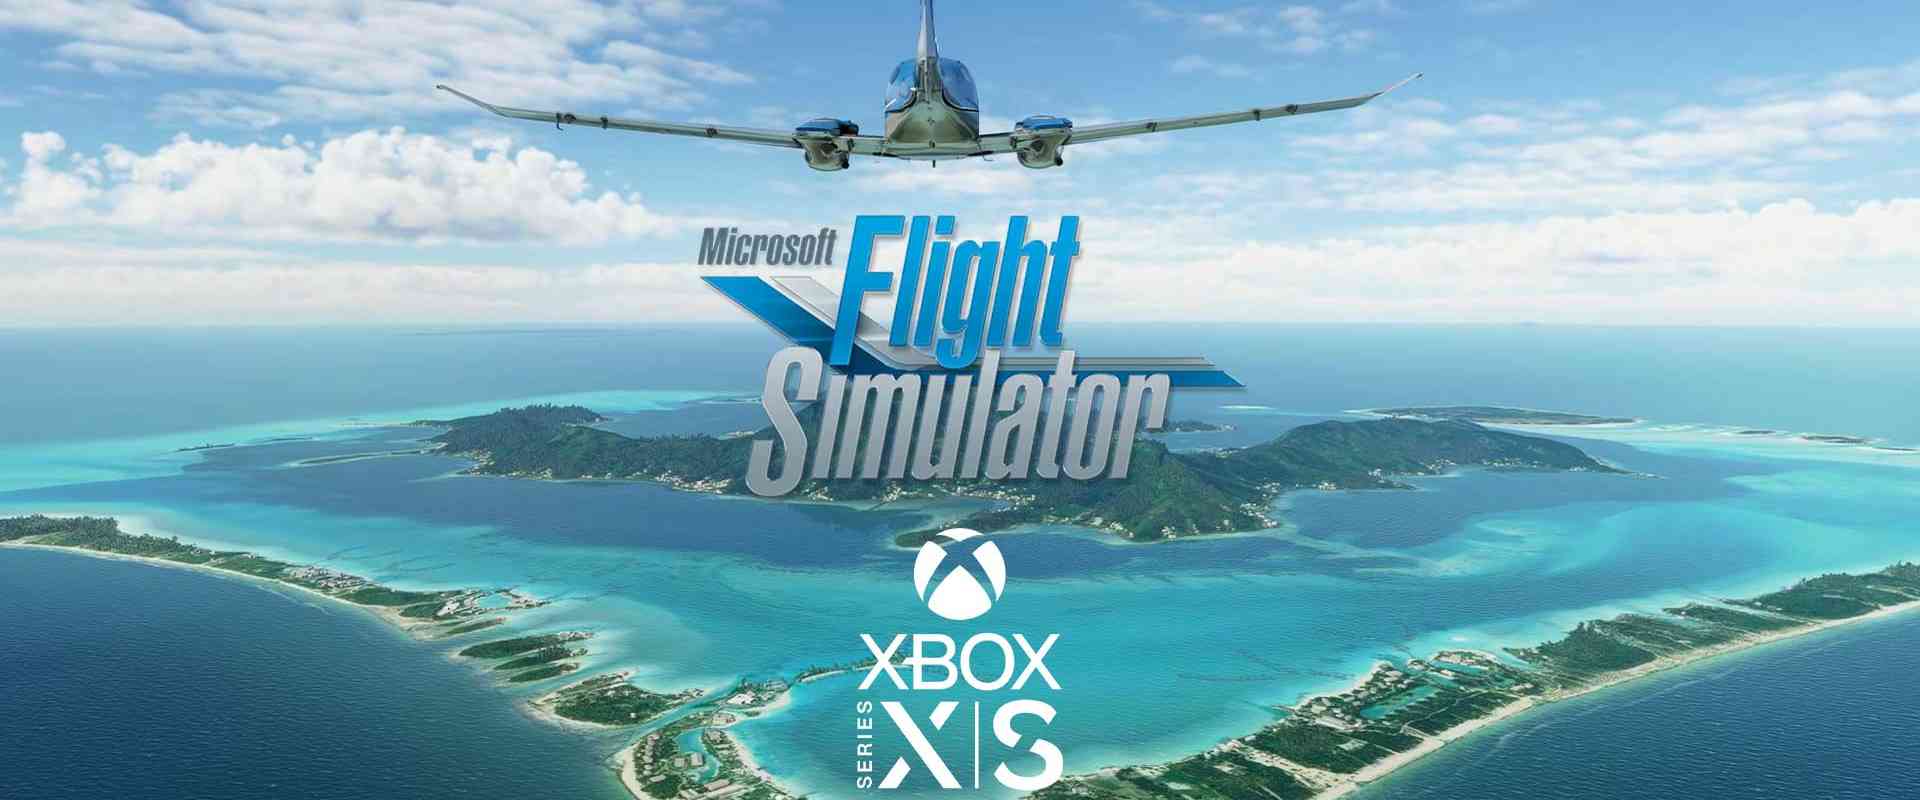 microsoft flight simulator xbox release